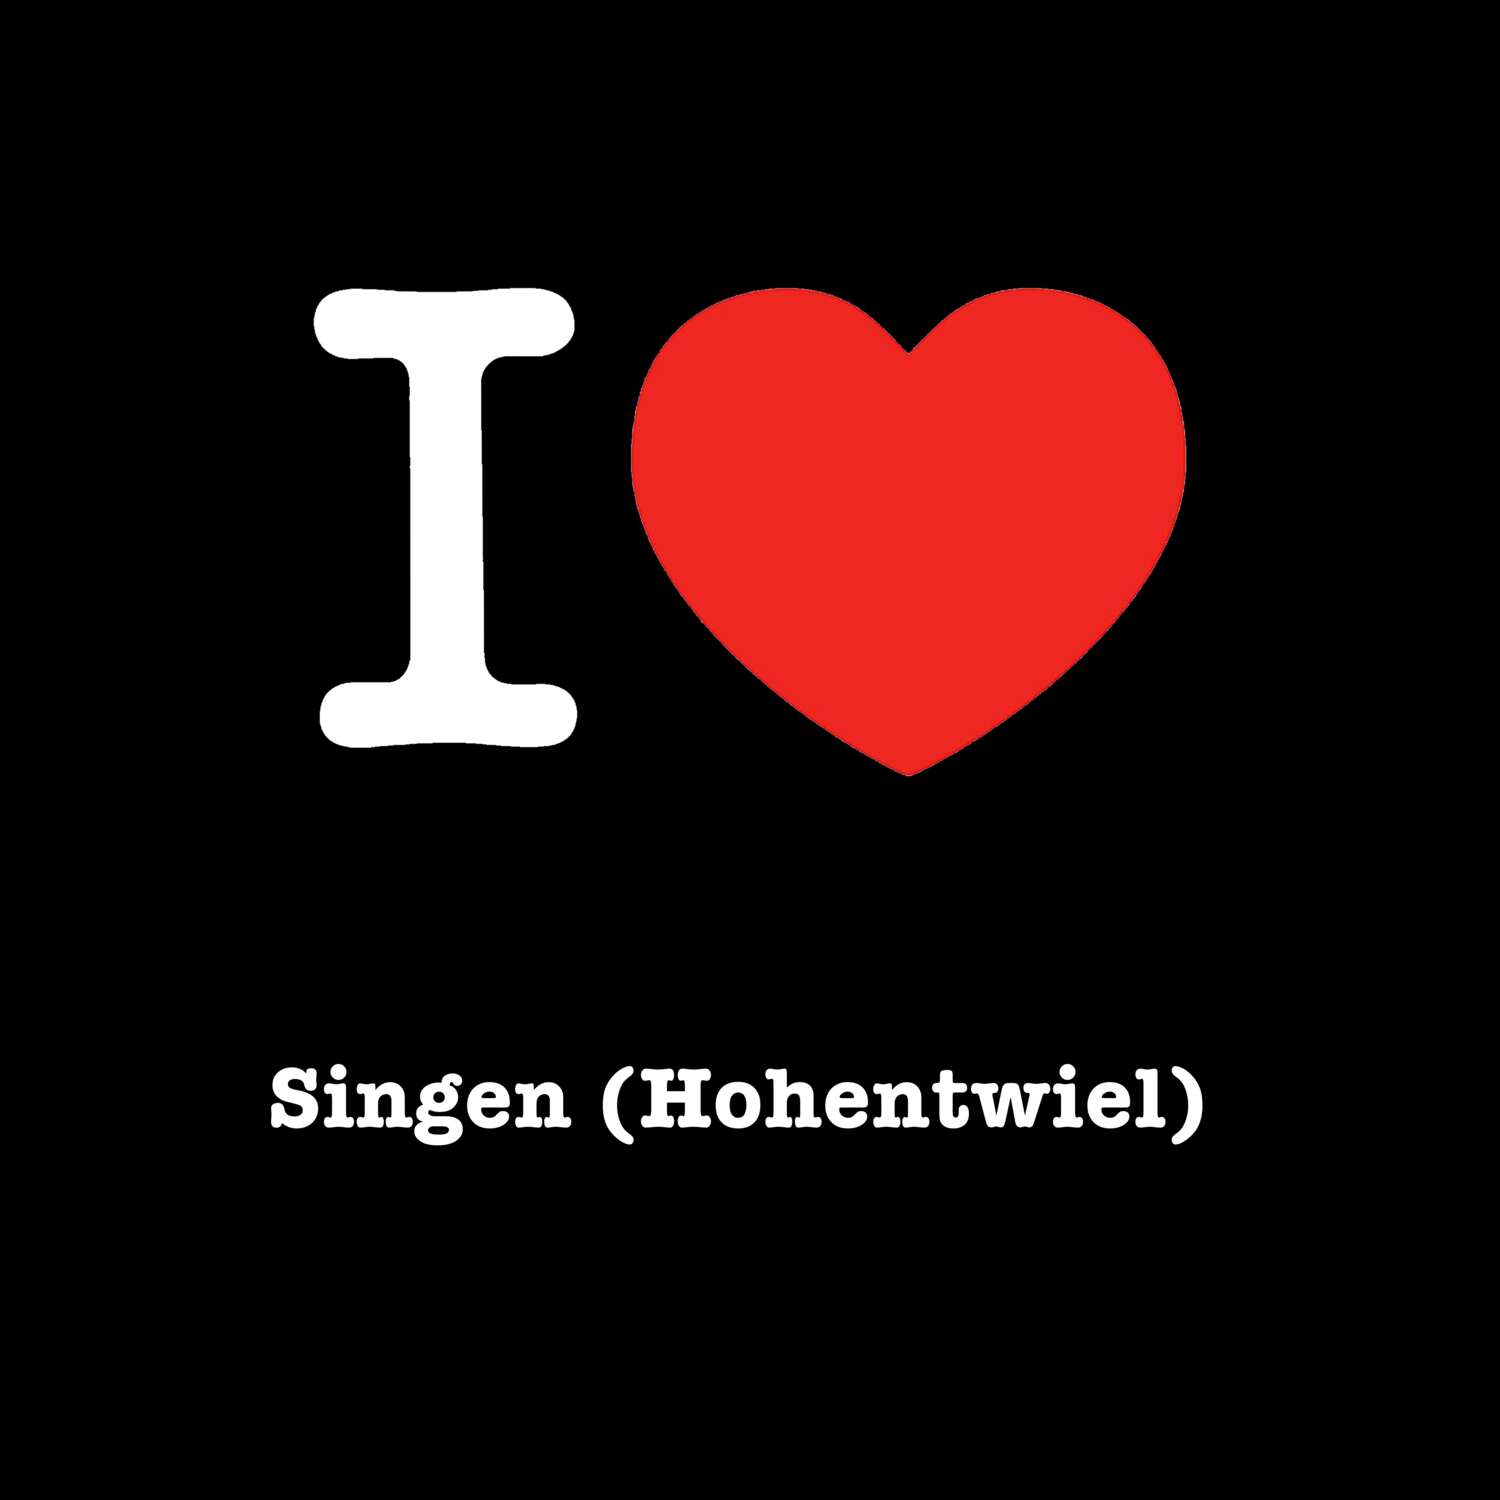 Singen (Hohentwiel) T-Shirt »I love«